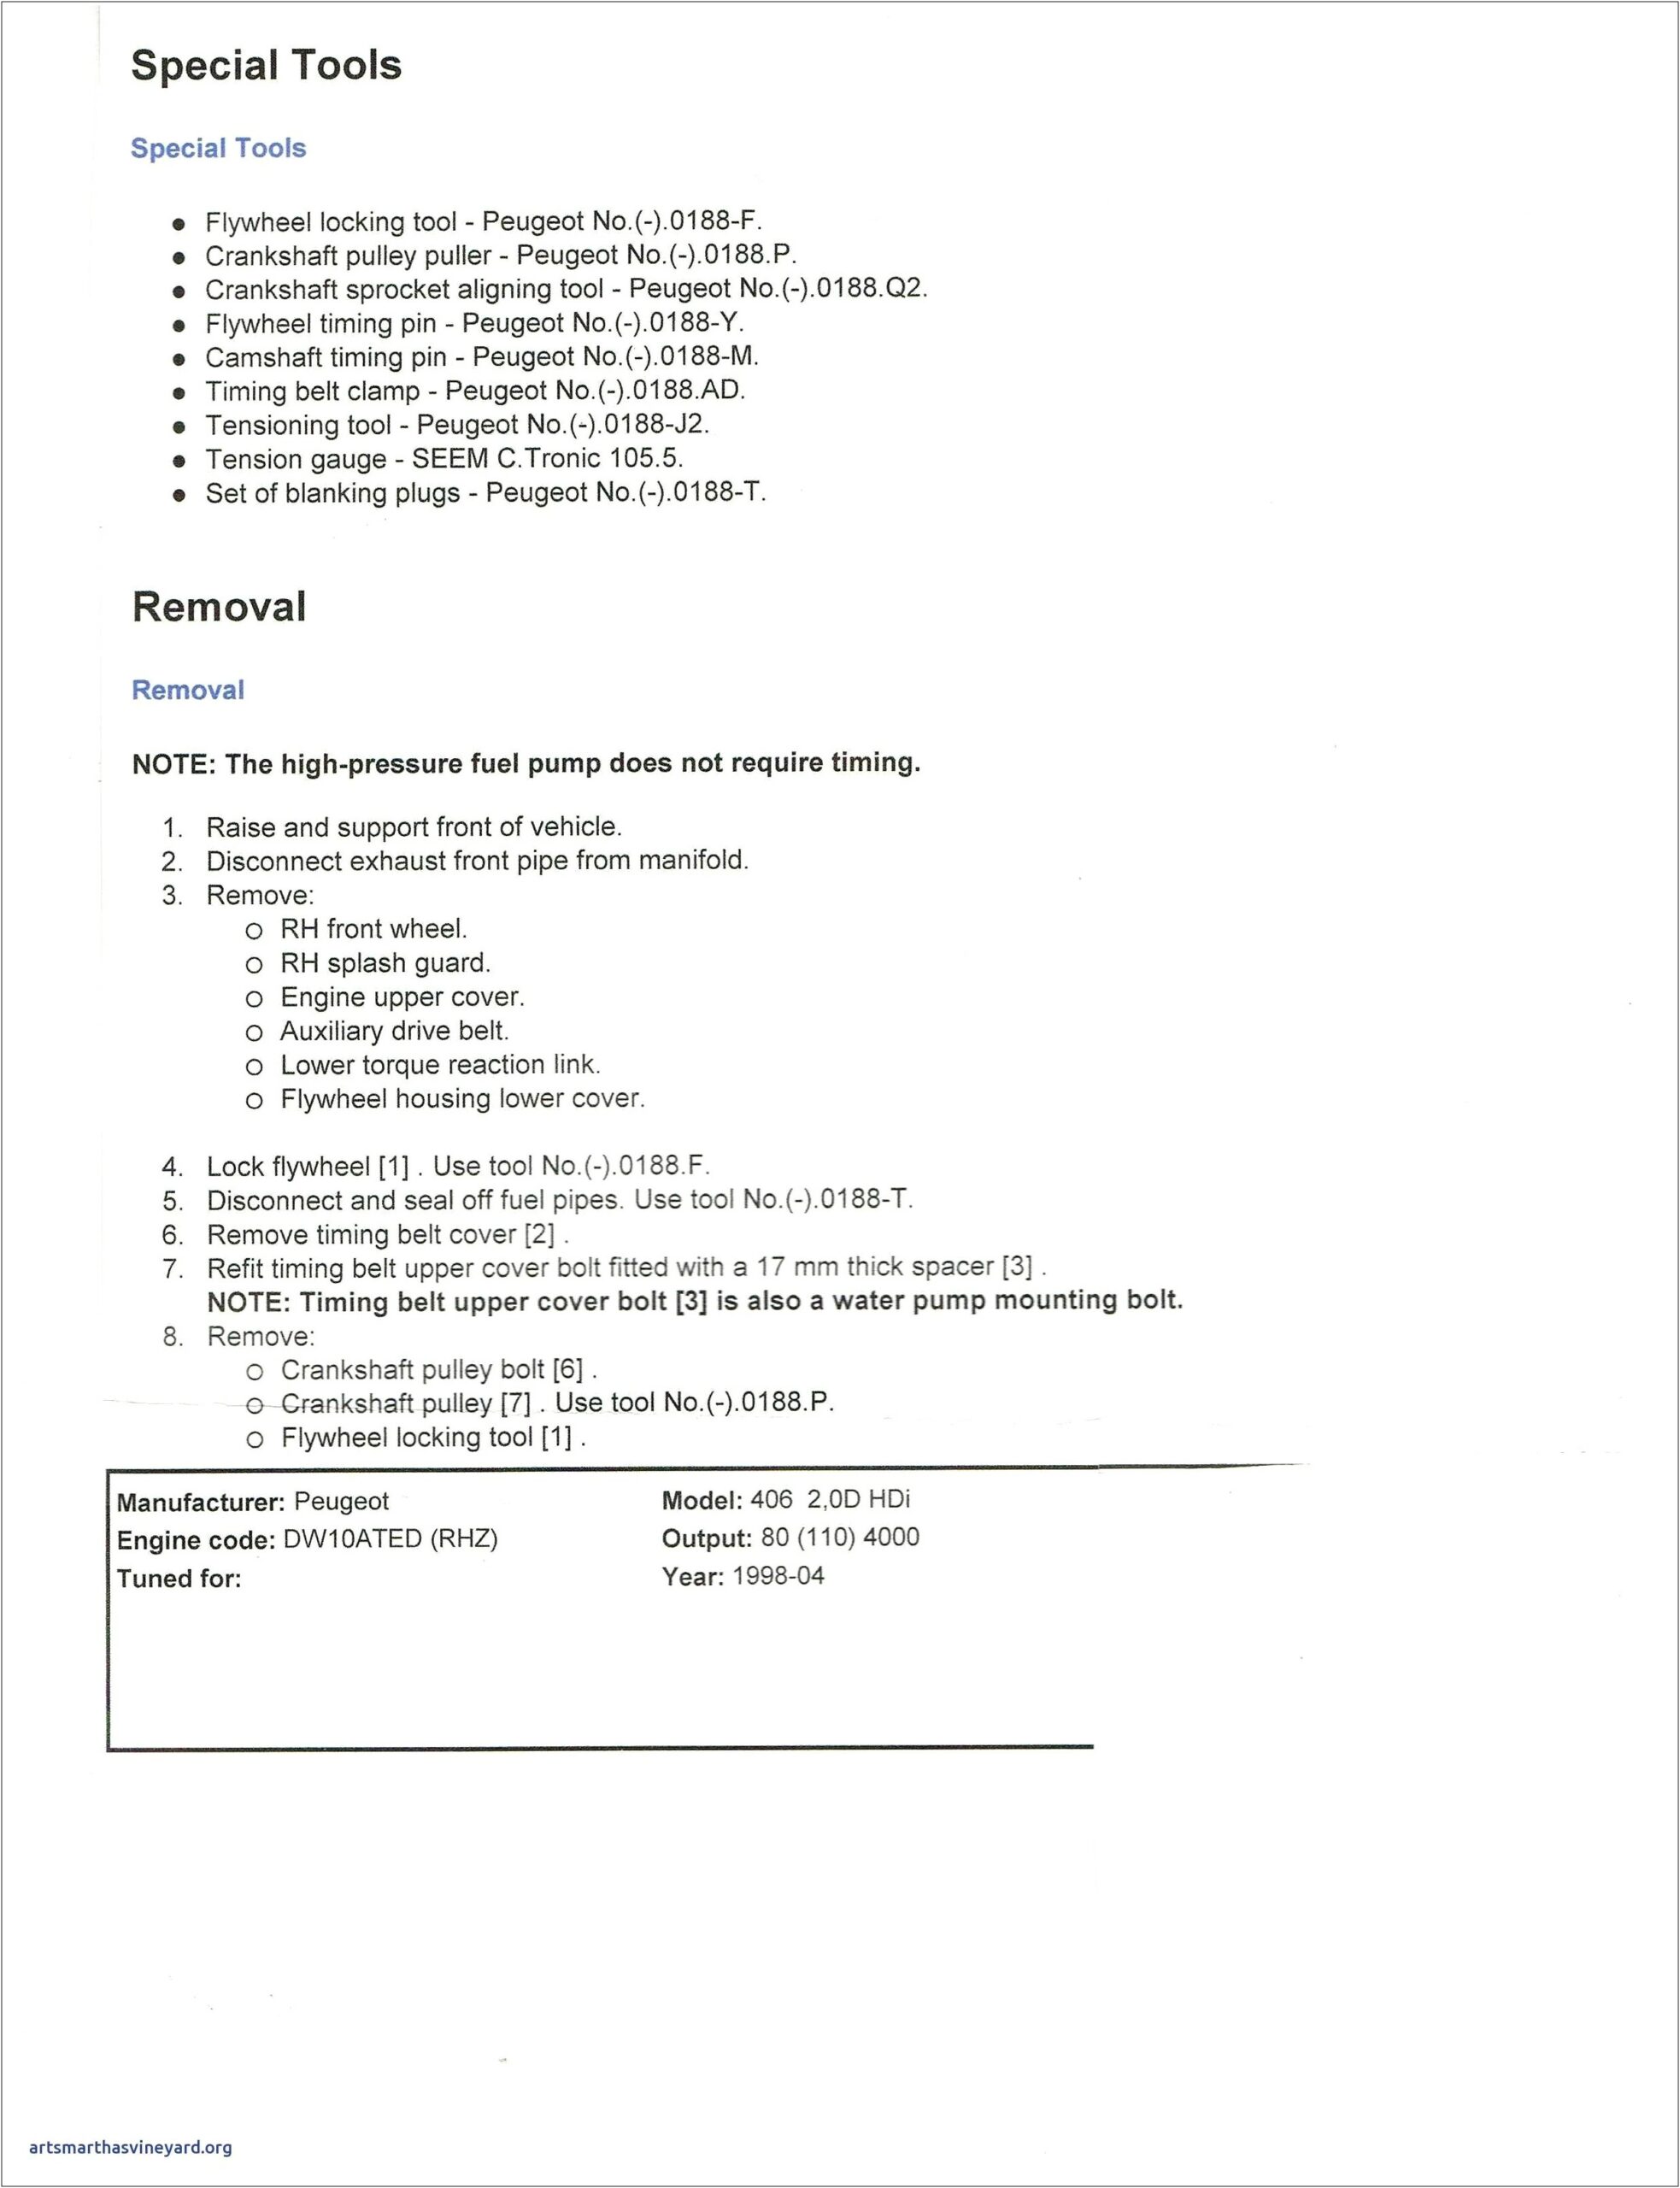 Blank Resume Format Free Download